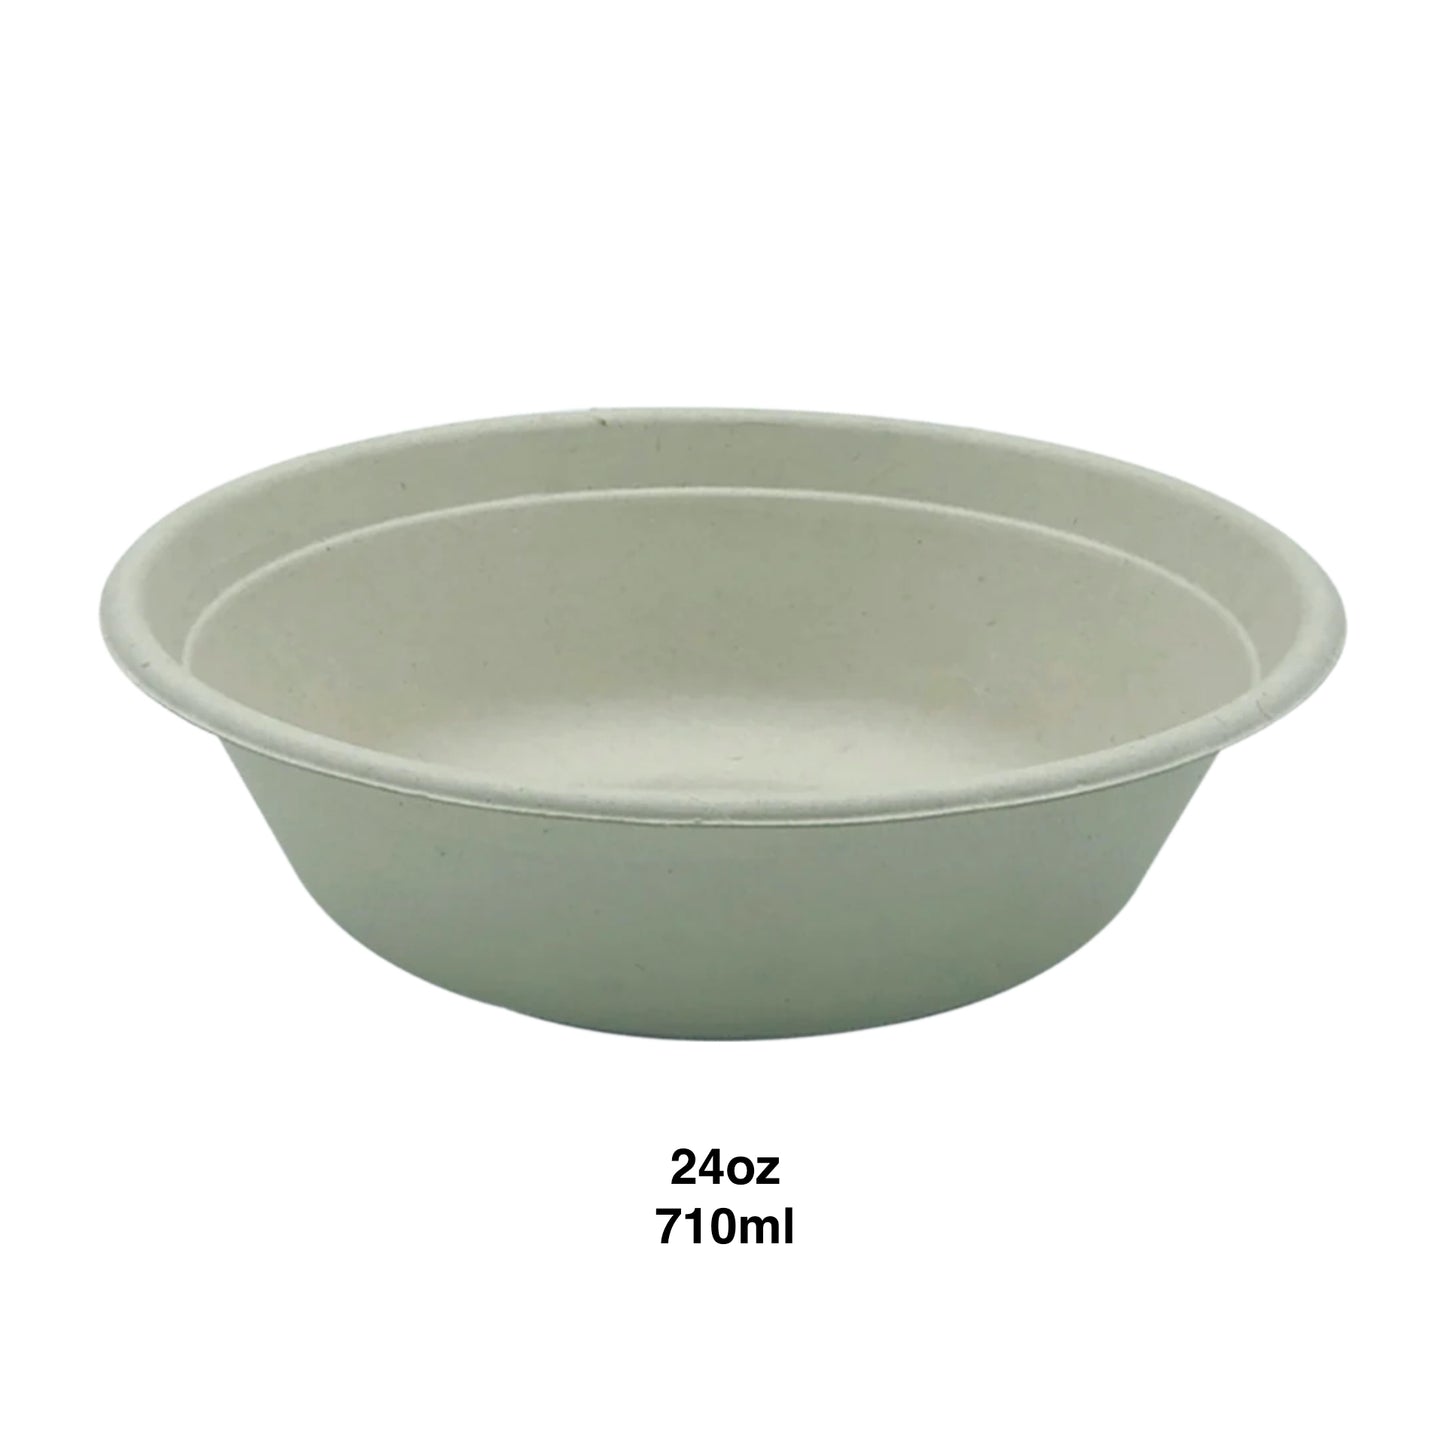 KIS-S24BG | 24oz, 710ml Round Bowl, 1-Compartment, Sugarcane Food Container; $0.116/pc